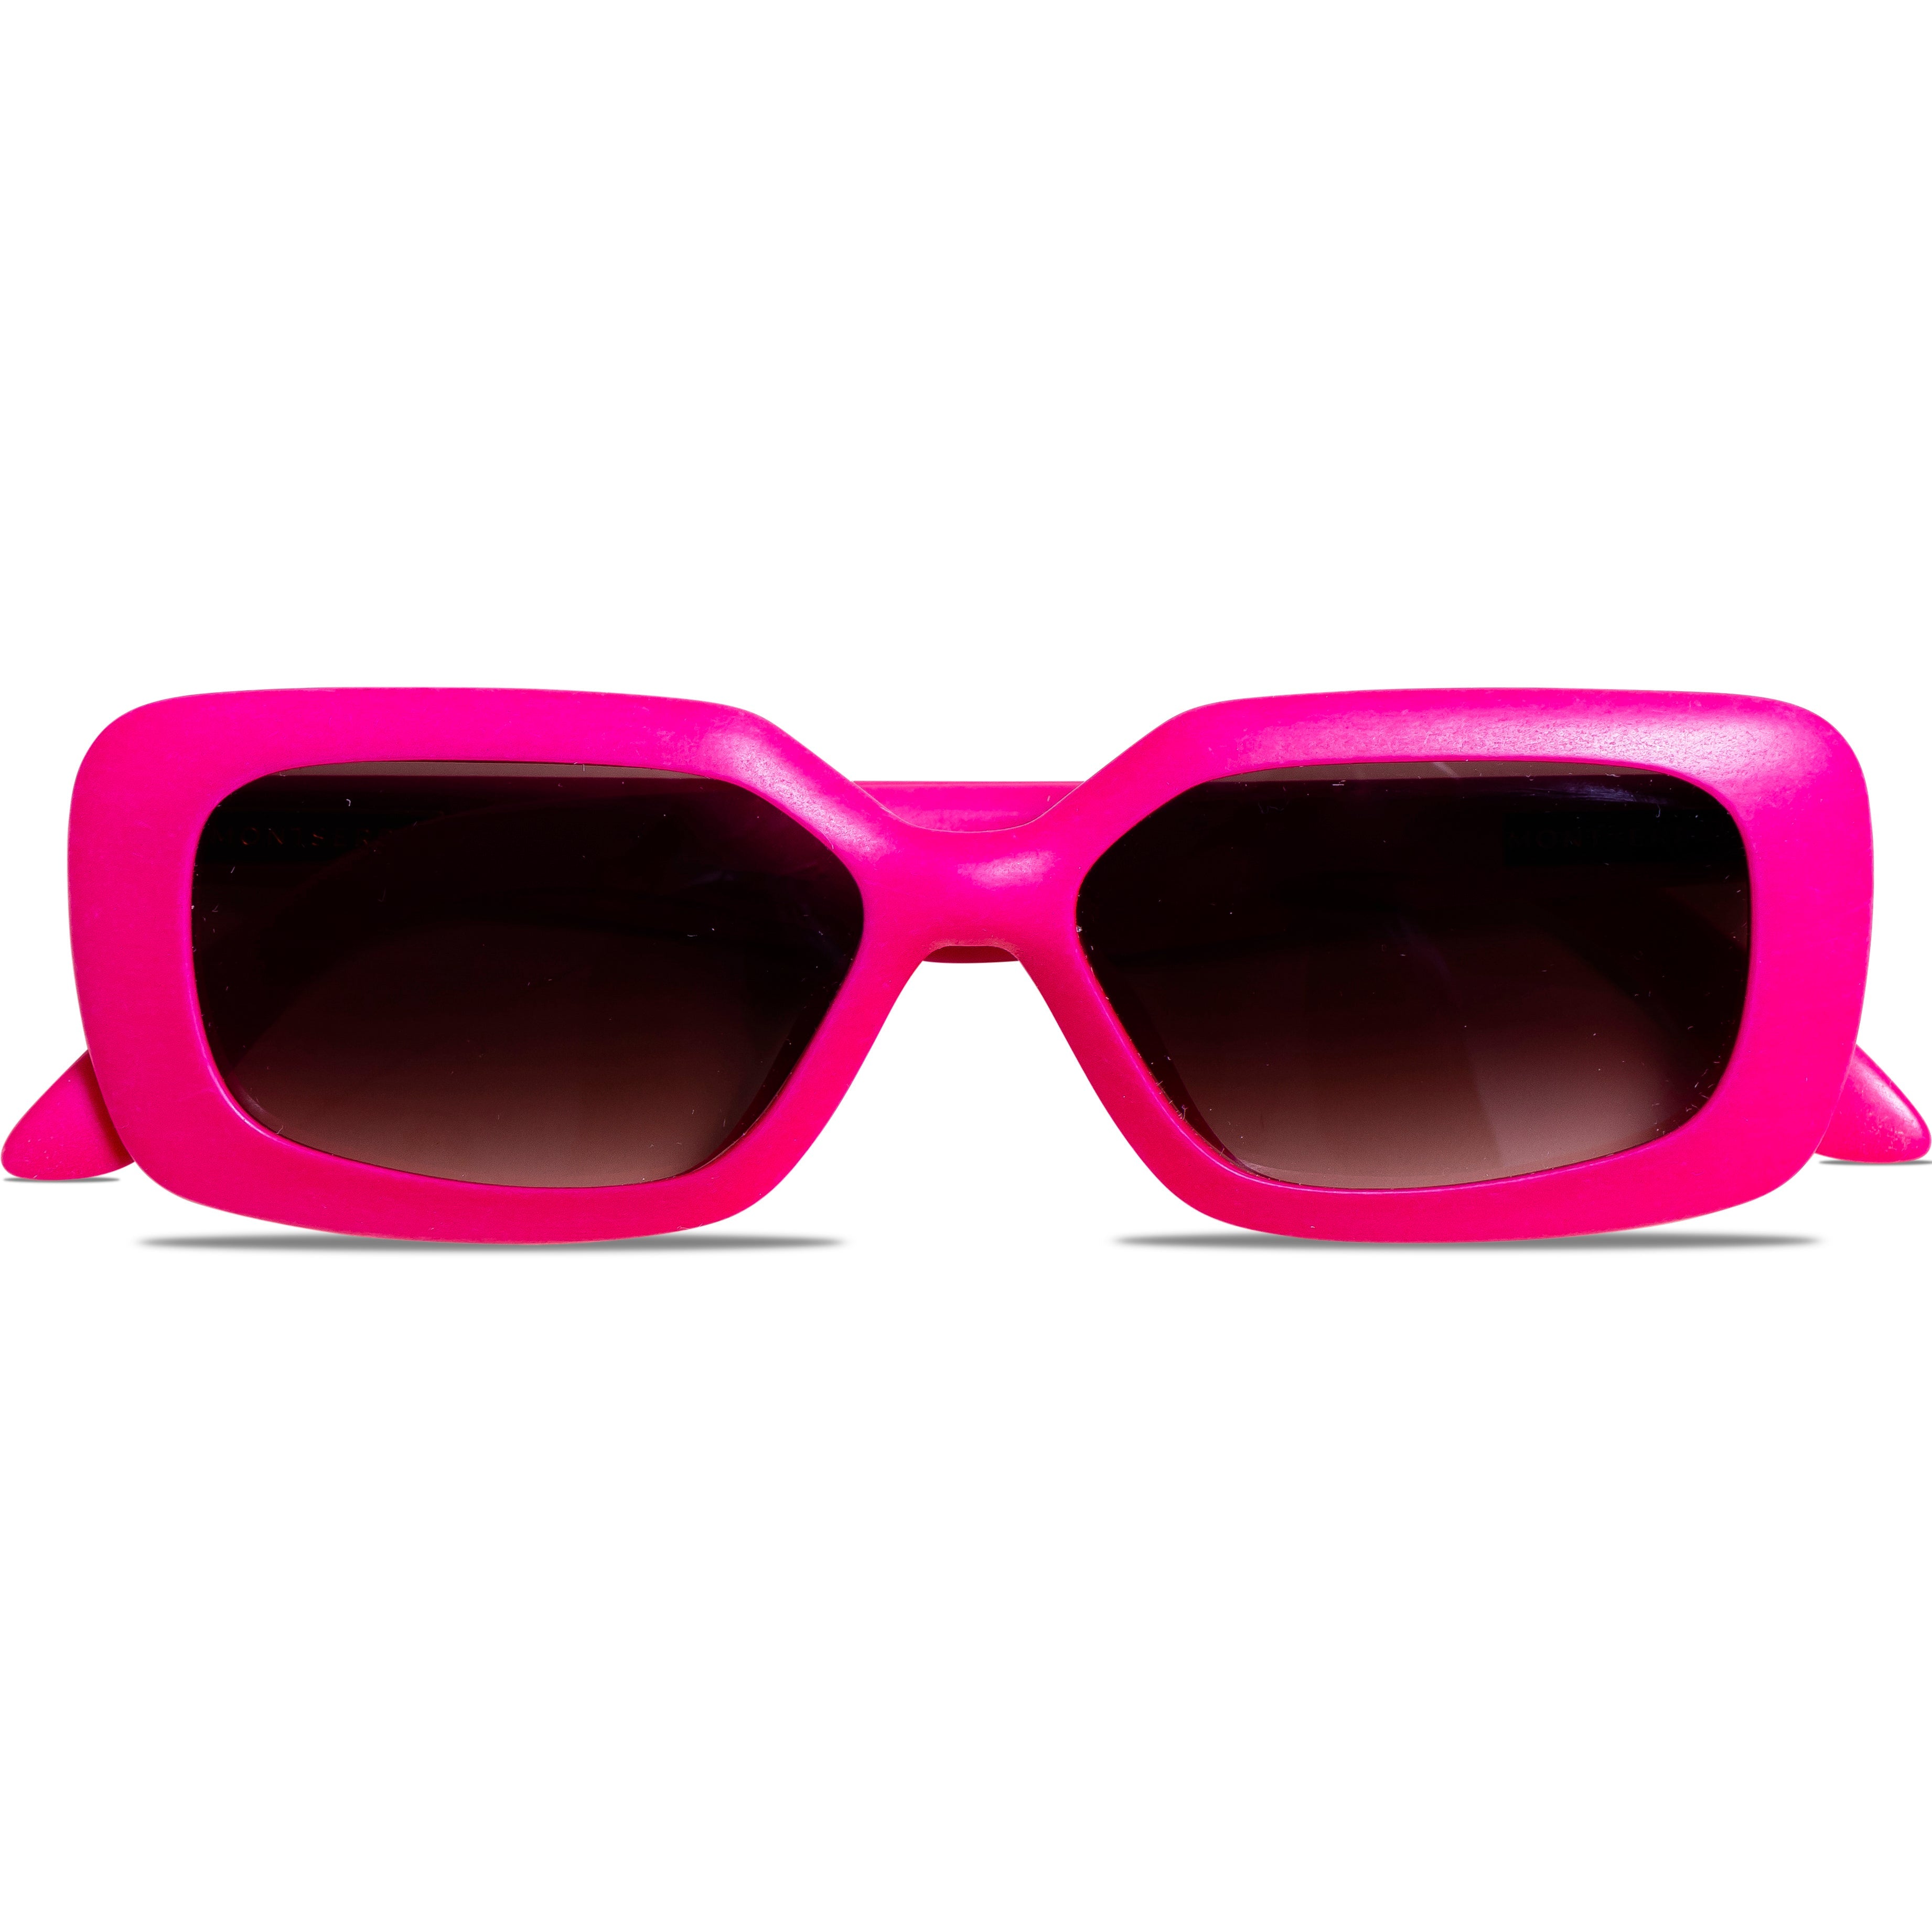 Picture of The Paros Sunglasses in Fuchsia